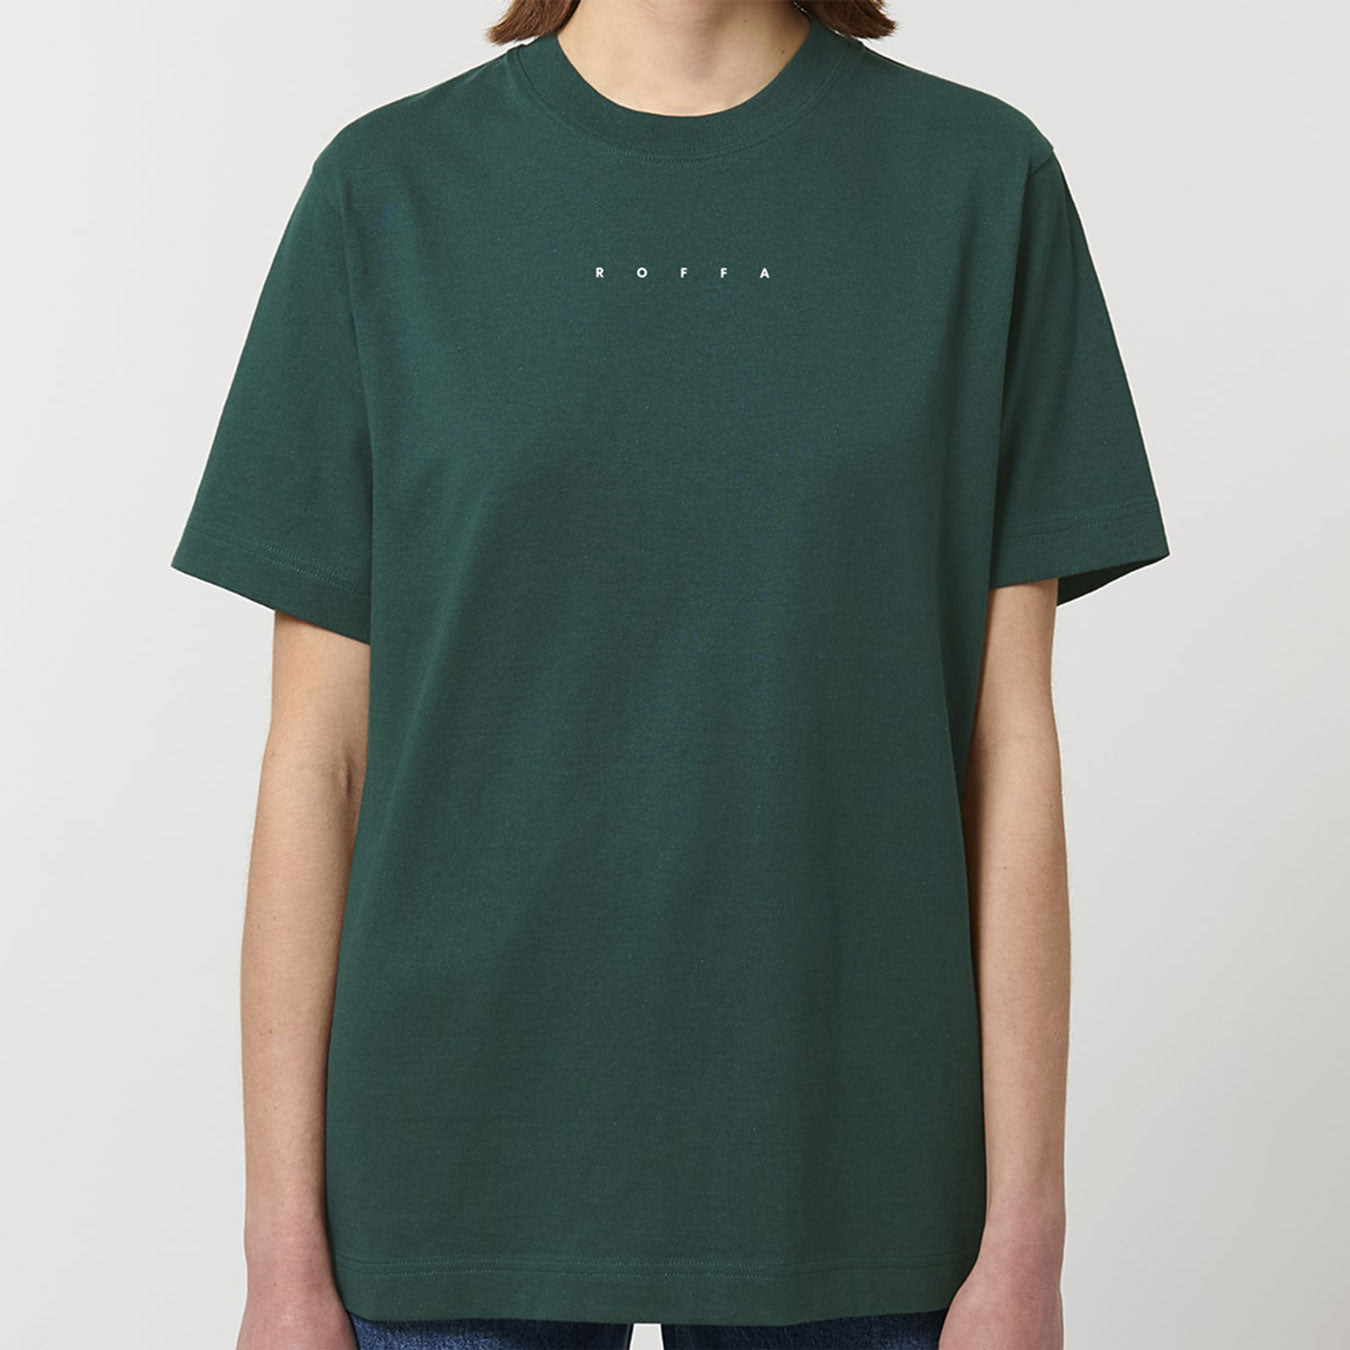 ROFFA. heavy t-shirt oversized - gespreid - 100% organisch katoen